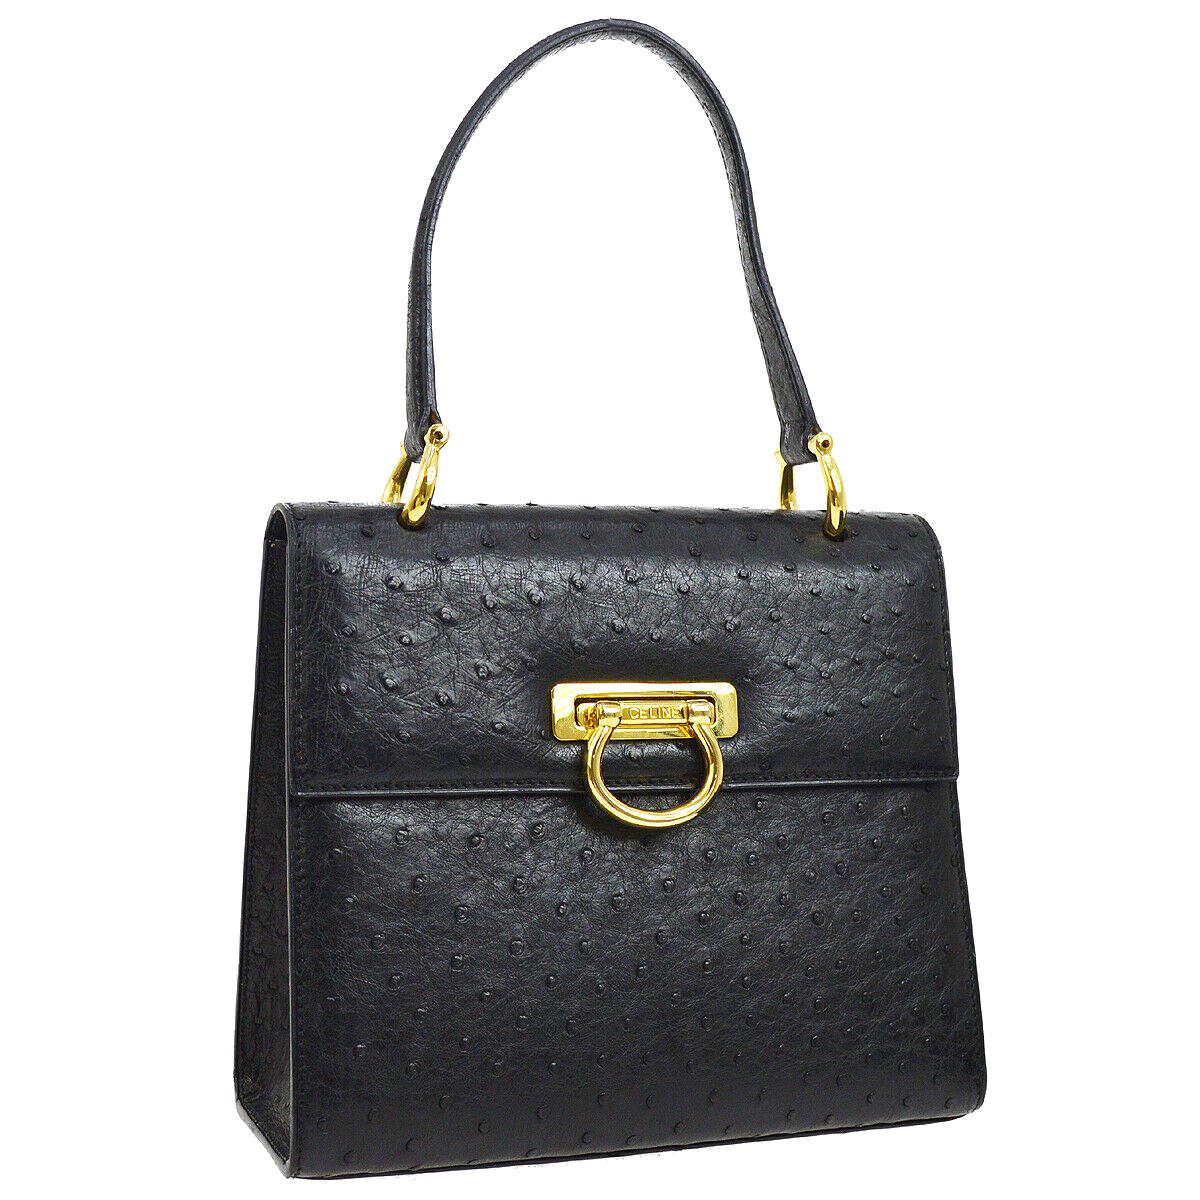 Celine Black Ostrich Leather Toggle Kelly Style Evening Top Handle Satchel Bag